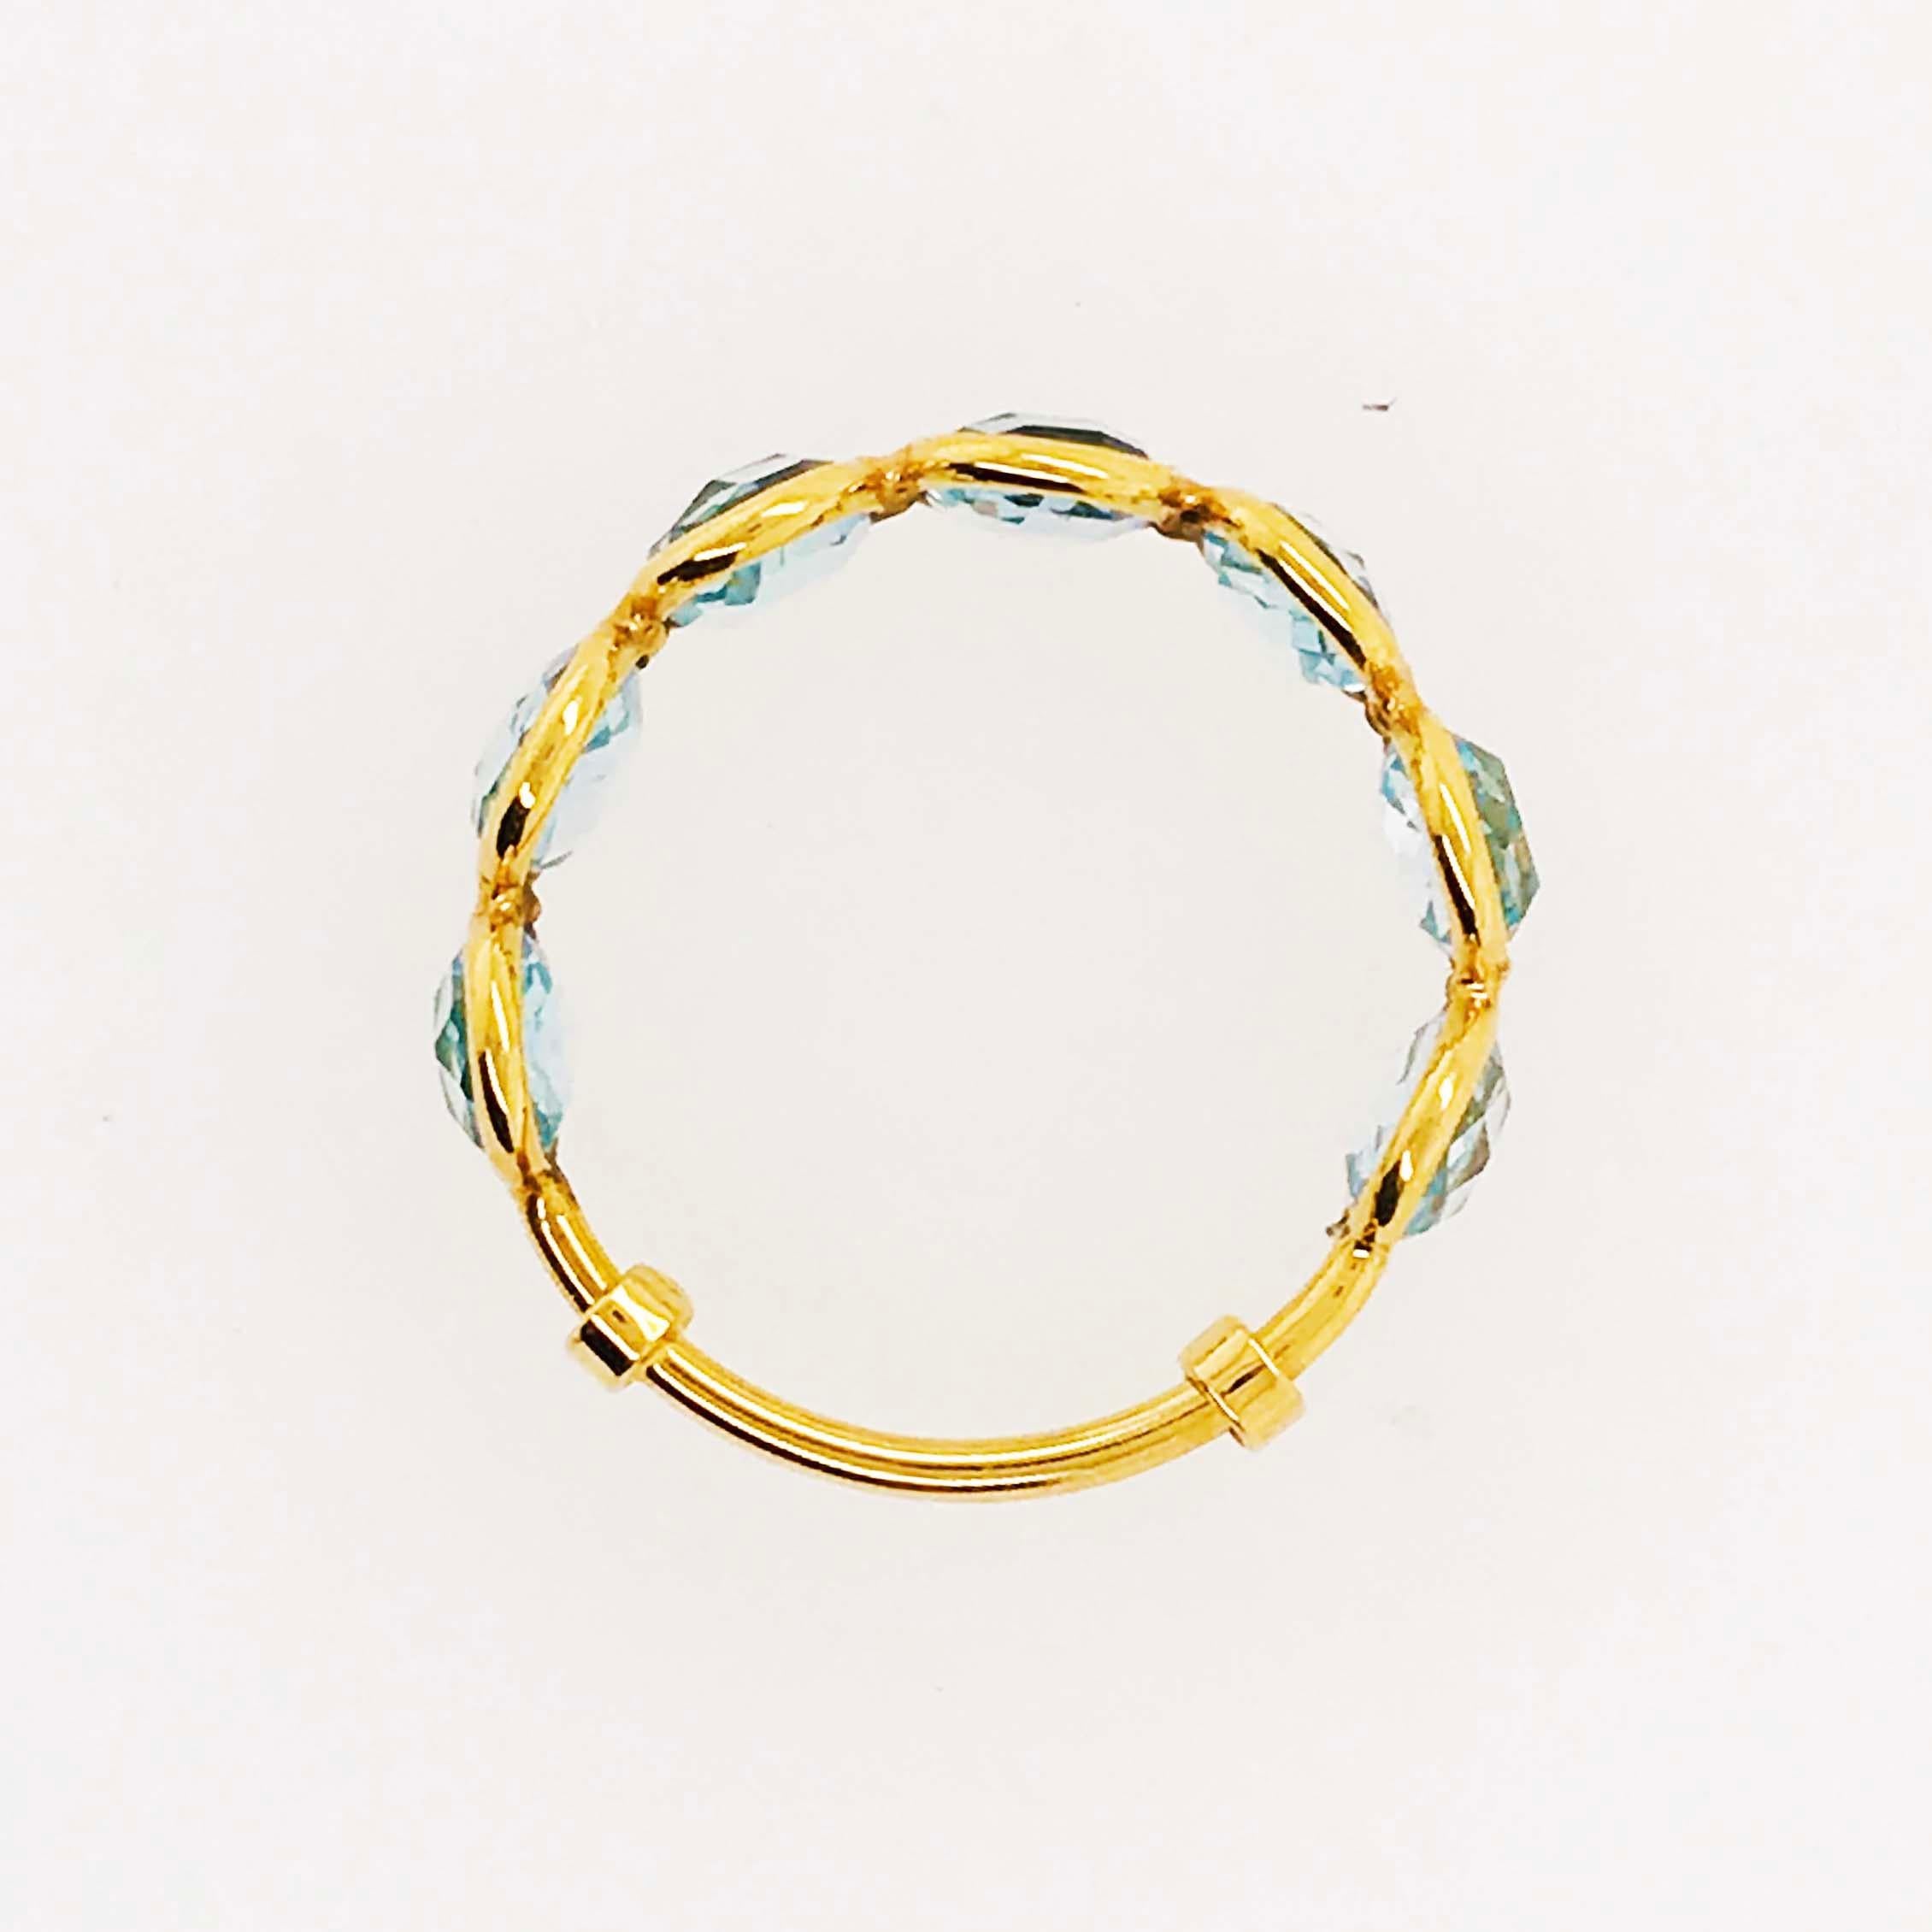 Blue Topaz Ring, Adjustable Ring in 18 Karat Gold 4 Carat Blue Topaz Gemstone 2